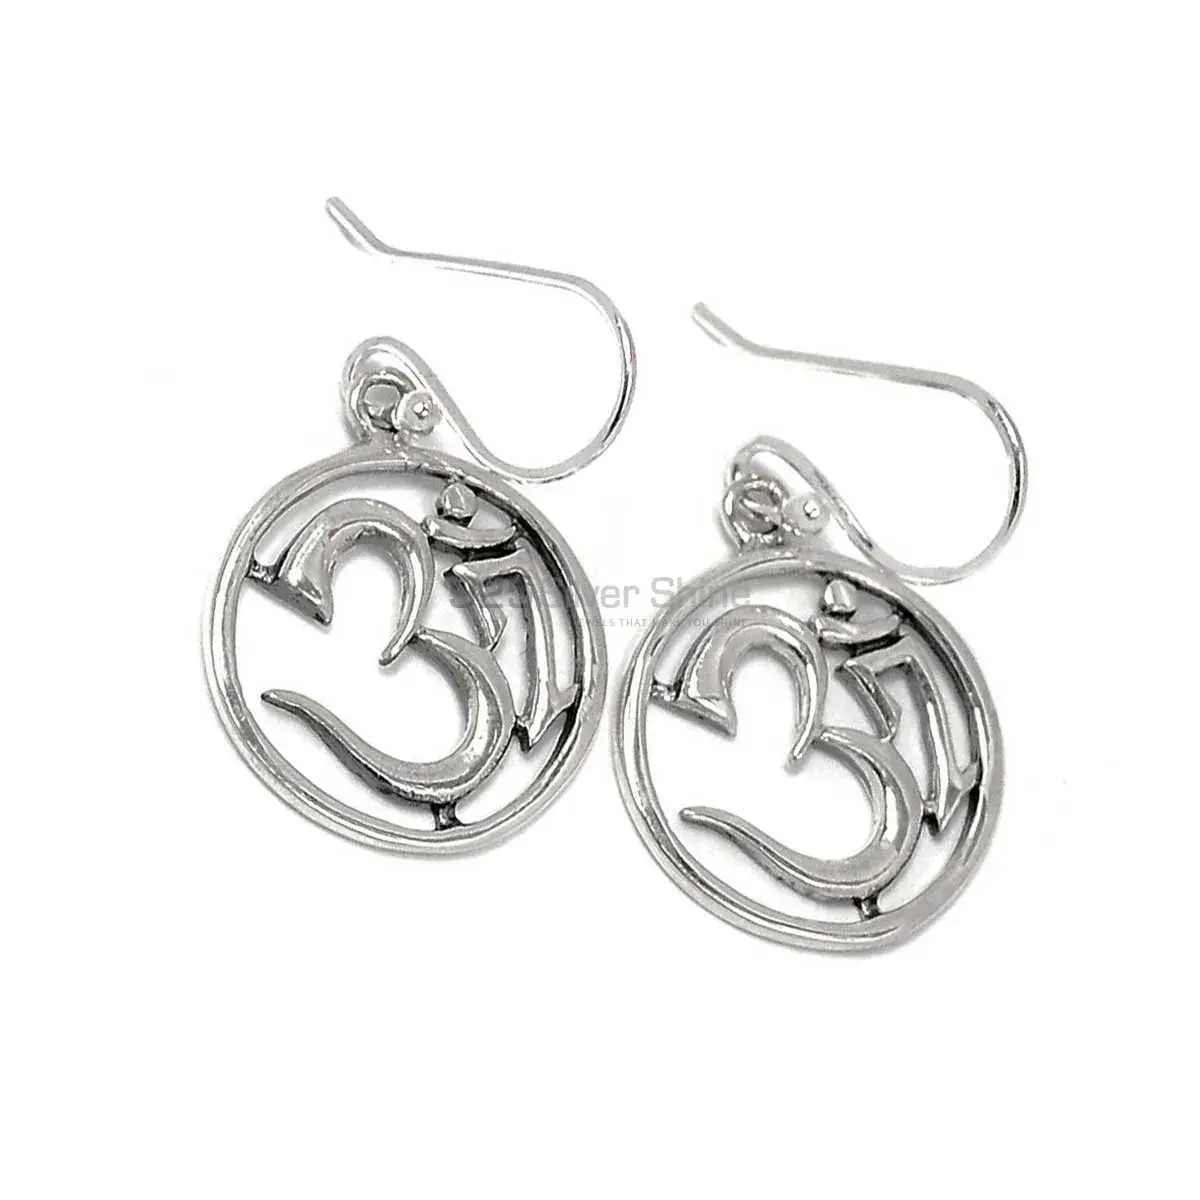 Wholesale Solid 925 Silver Oxidized Earrings Jewelry 925SE2889_2